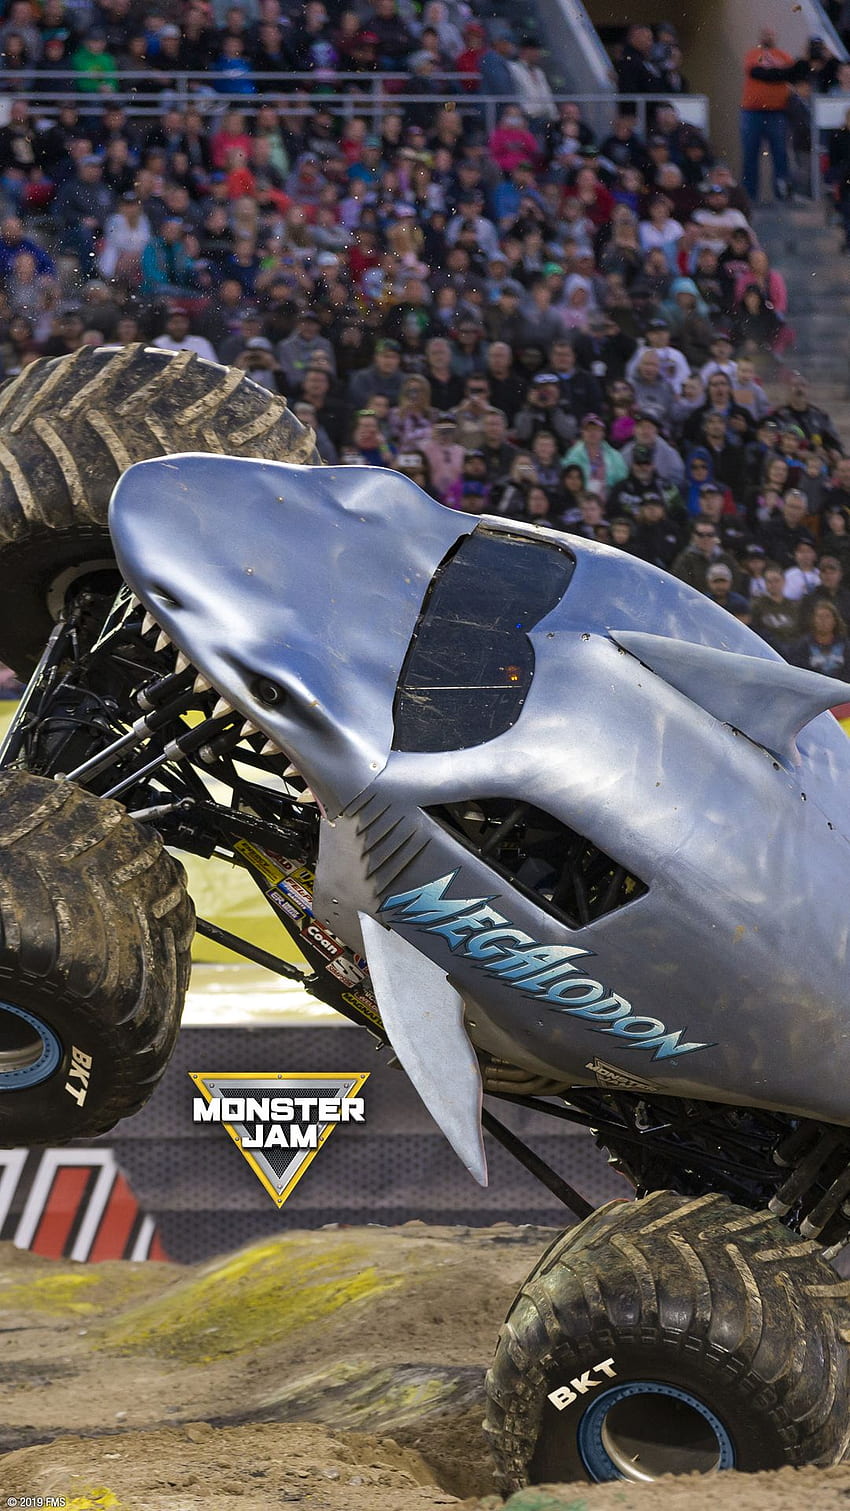 Monster Jam returns to Hartford for adrenalinecharged arena championship